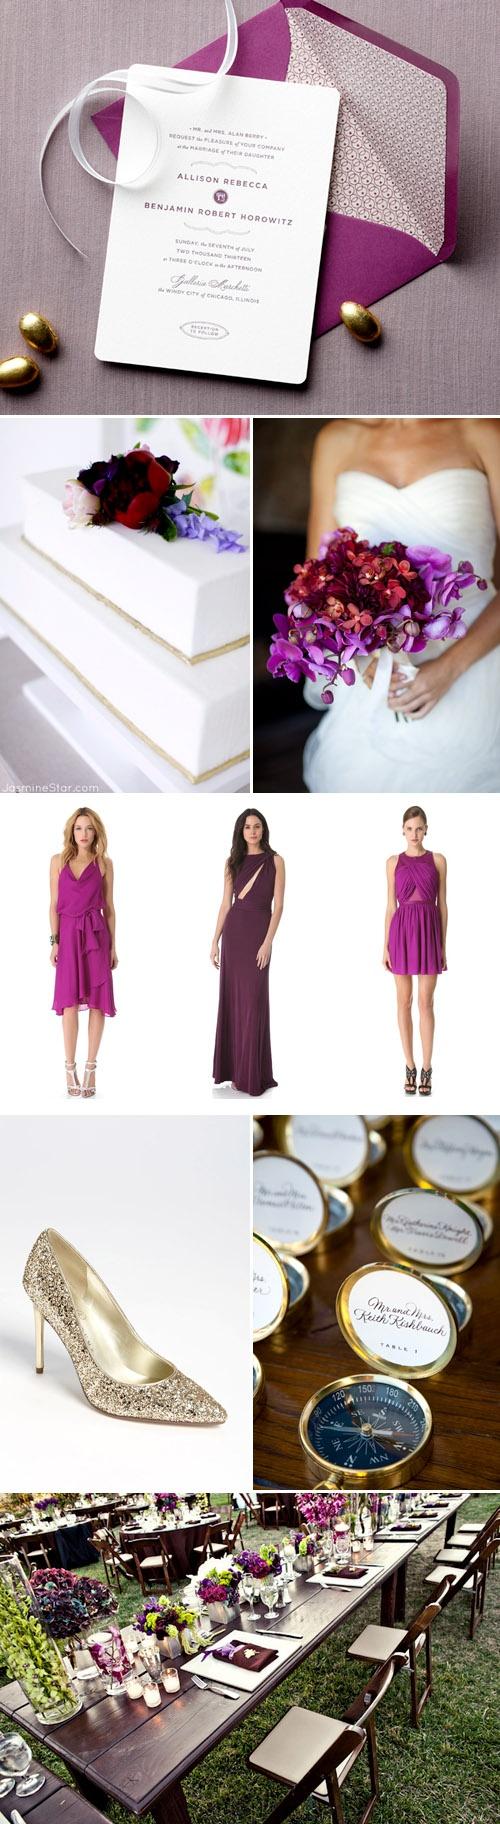 Wedding - Wedding Color Ideas & Inspiration Boards